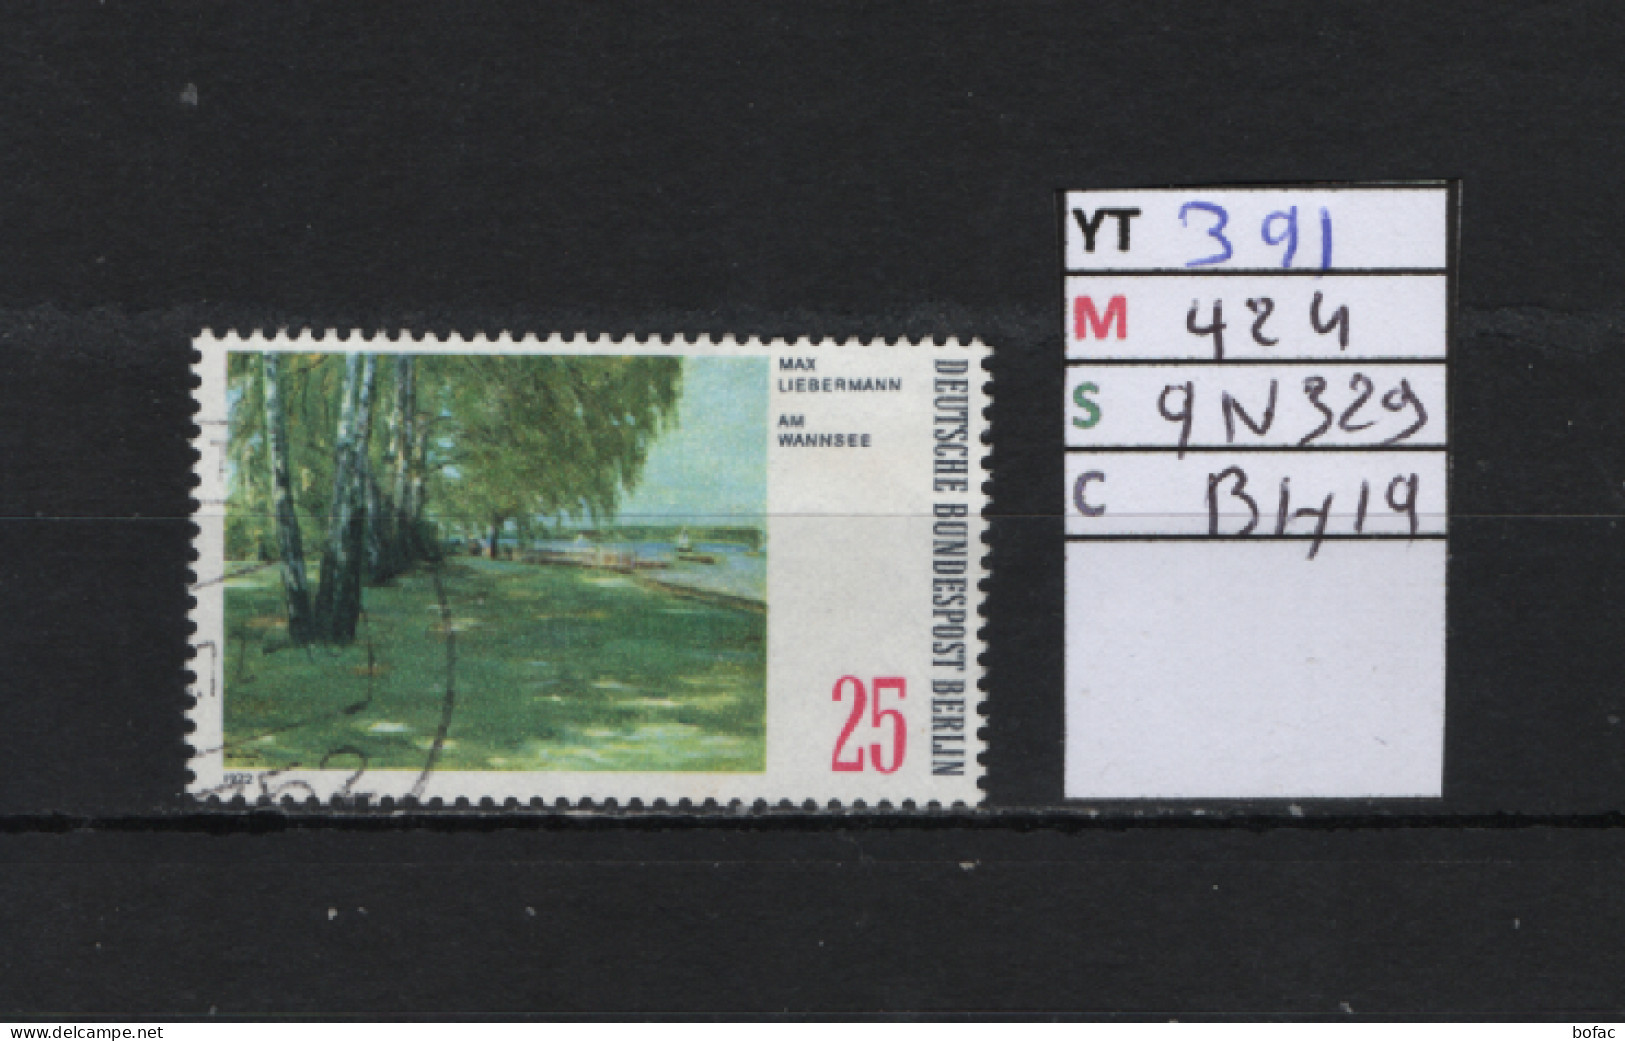 P. FIXE Obl 391 YT 424 MIC 9N329 SCO B419 GIB Lac Wann Paysages Autour De Berlin 1972 *Berlin* 75/03 - Used Stamps